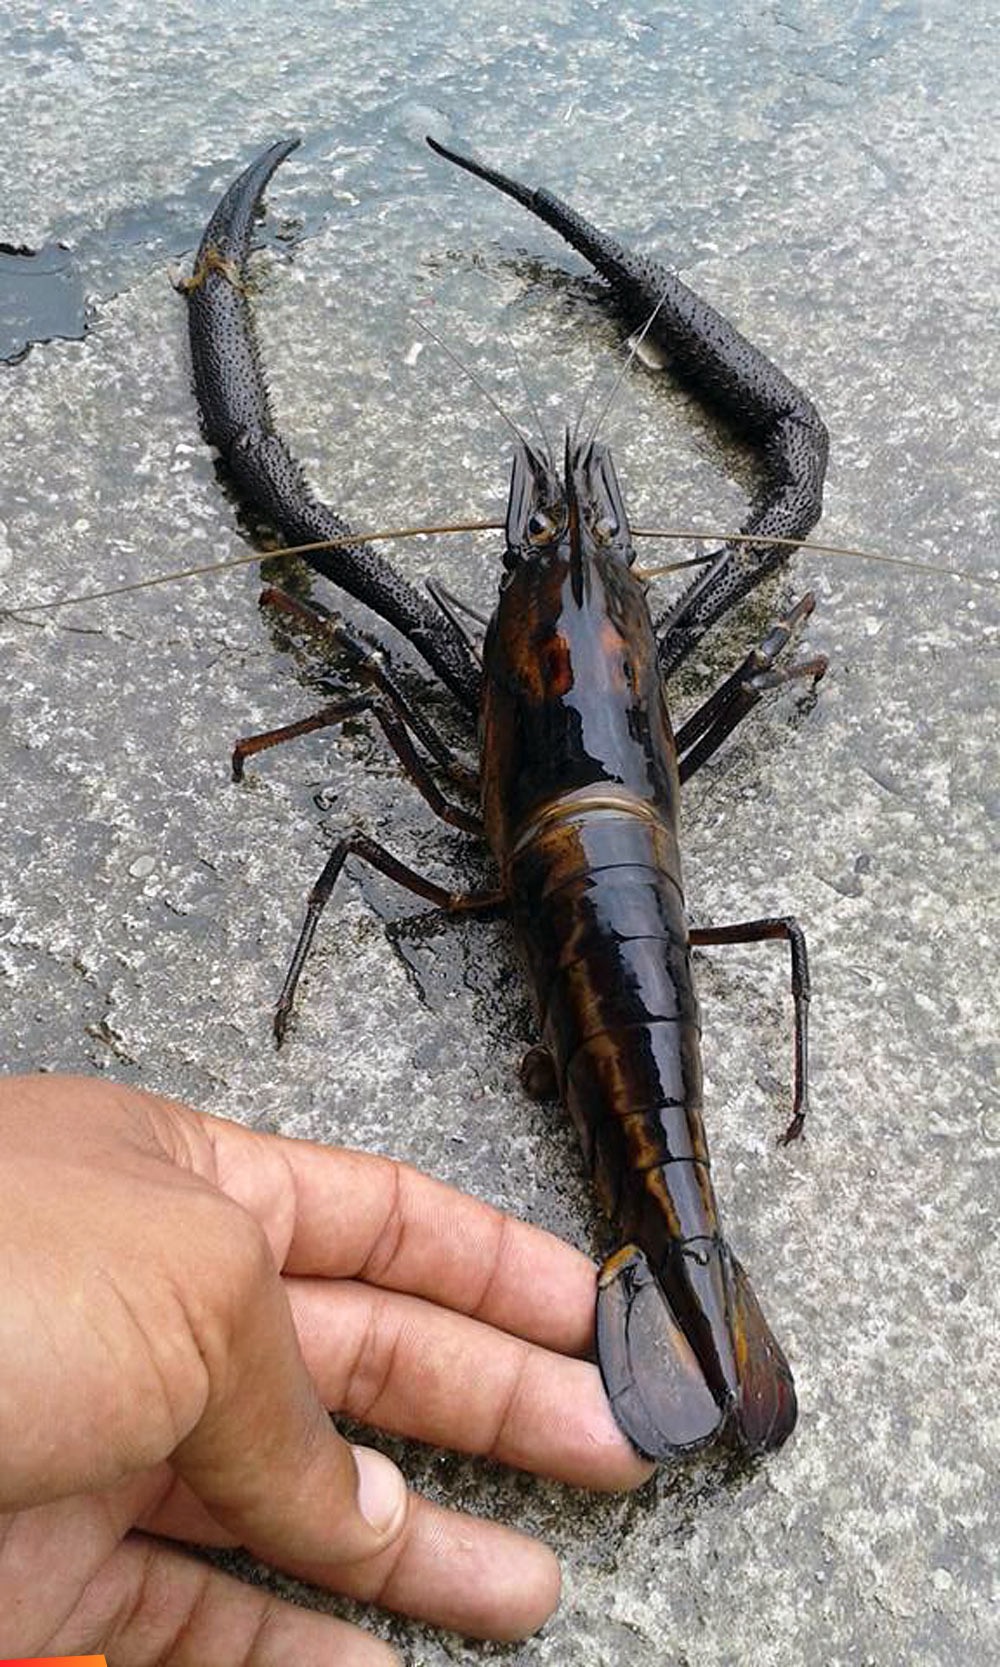 Big river lobster, aka Écrevisse, aka crayfish, aka Macrobrachium carcinus